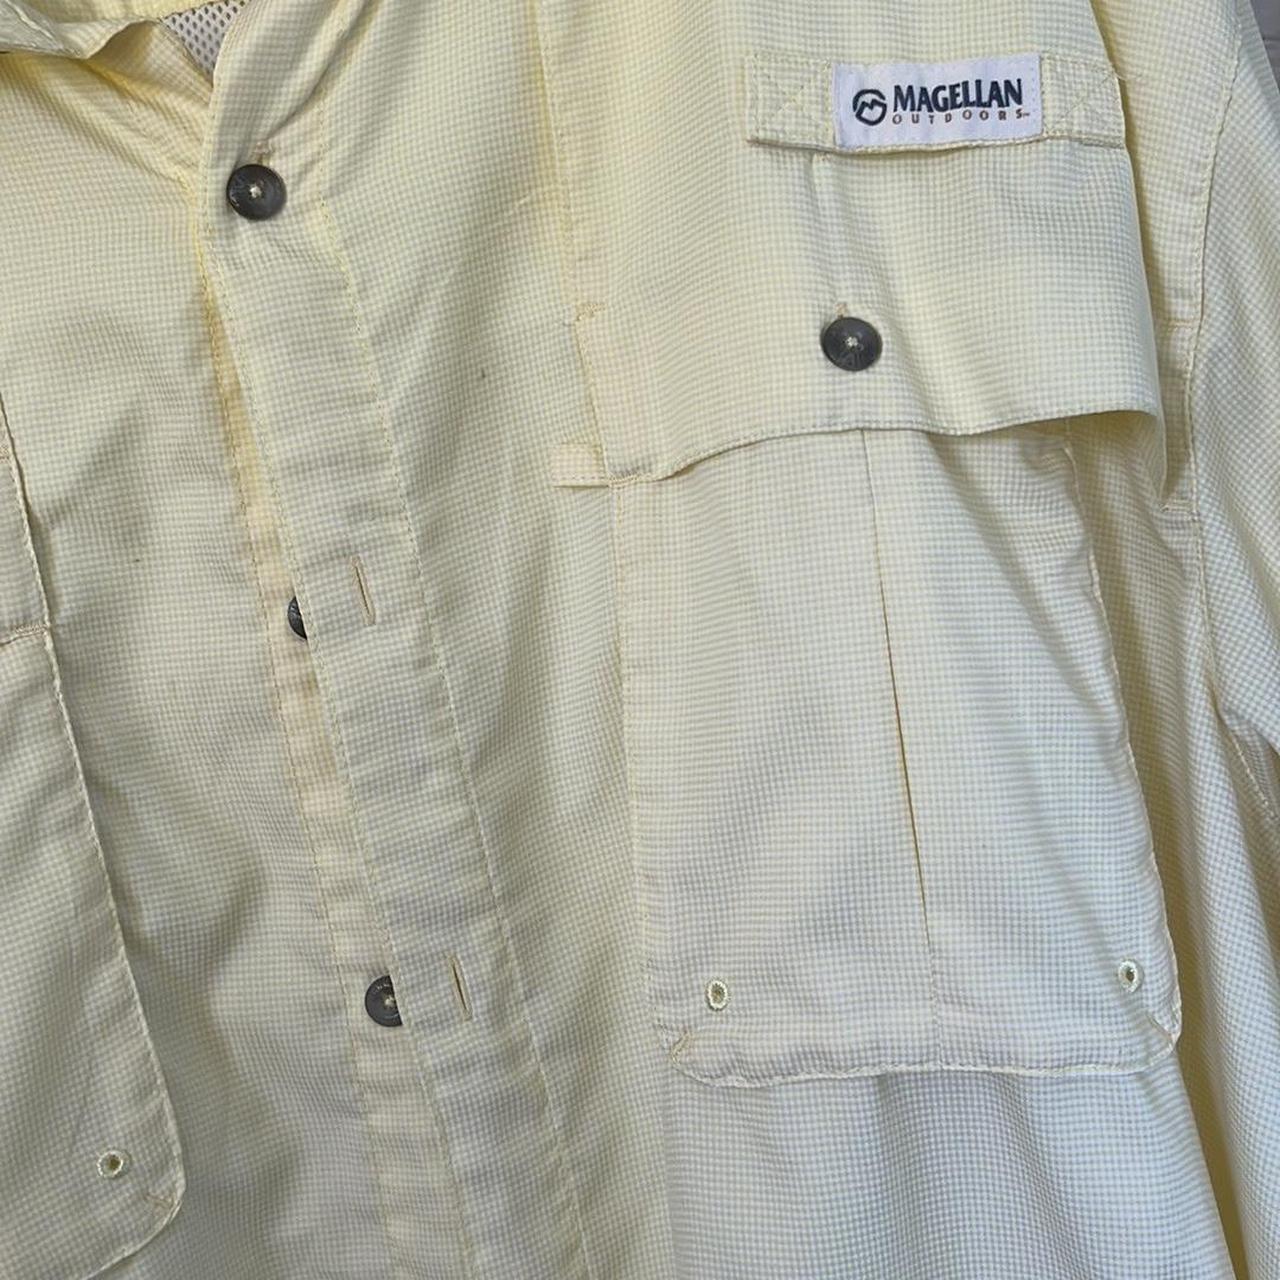 Magellan Outdoors Men's XL Yellow Short Sleeve Button Down Fishing